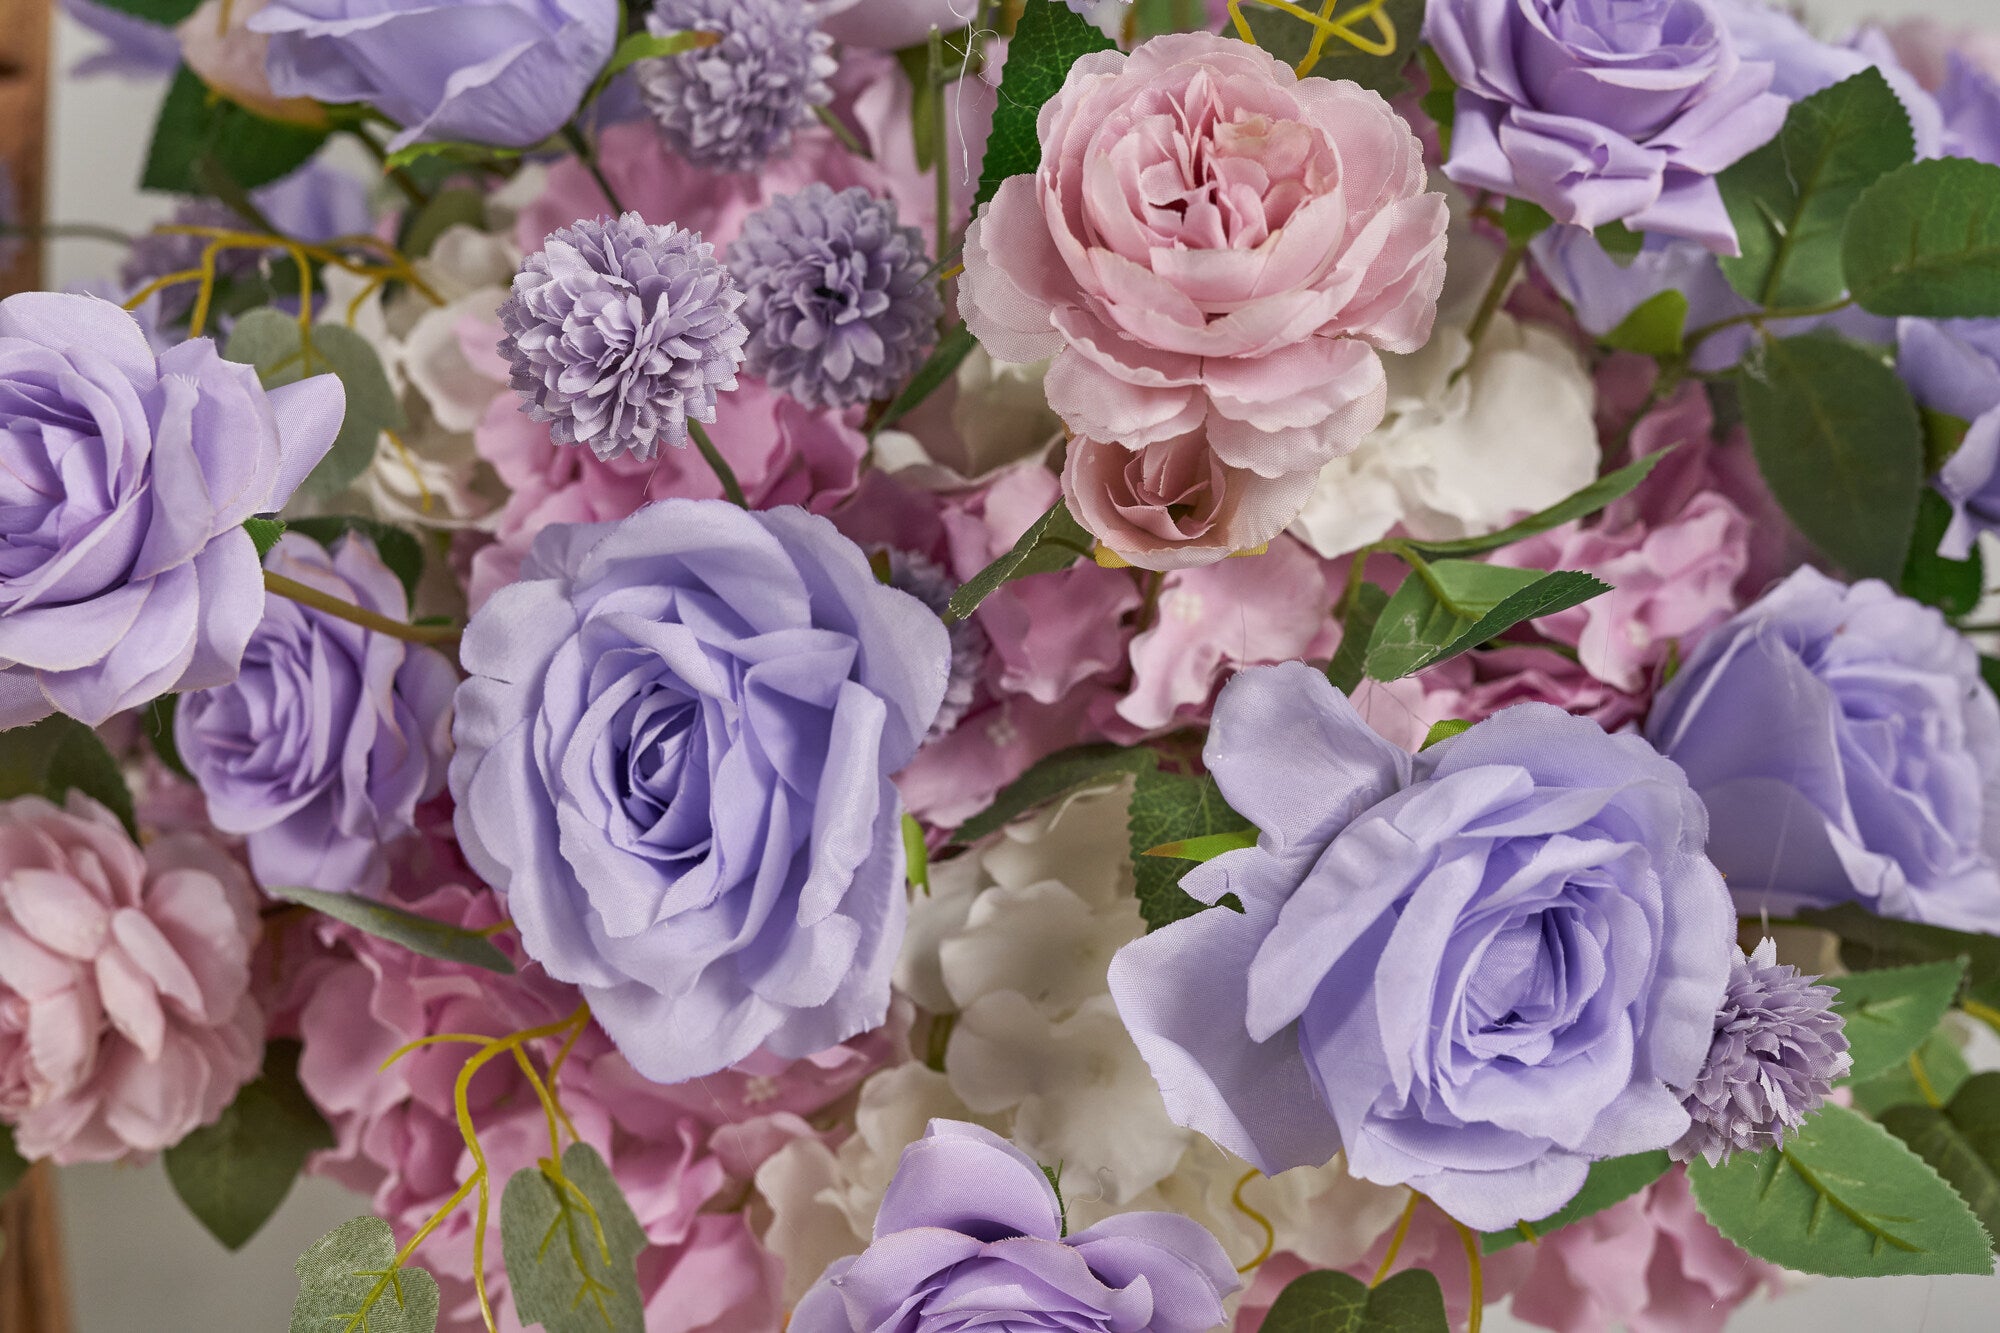 Flower Ball Retro Purple Rose Wedding Proposal Party Centerpieces Decor